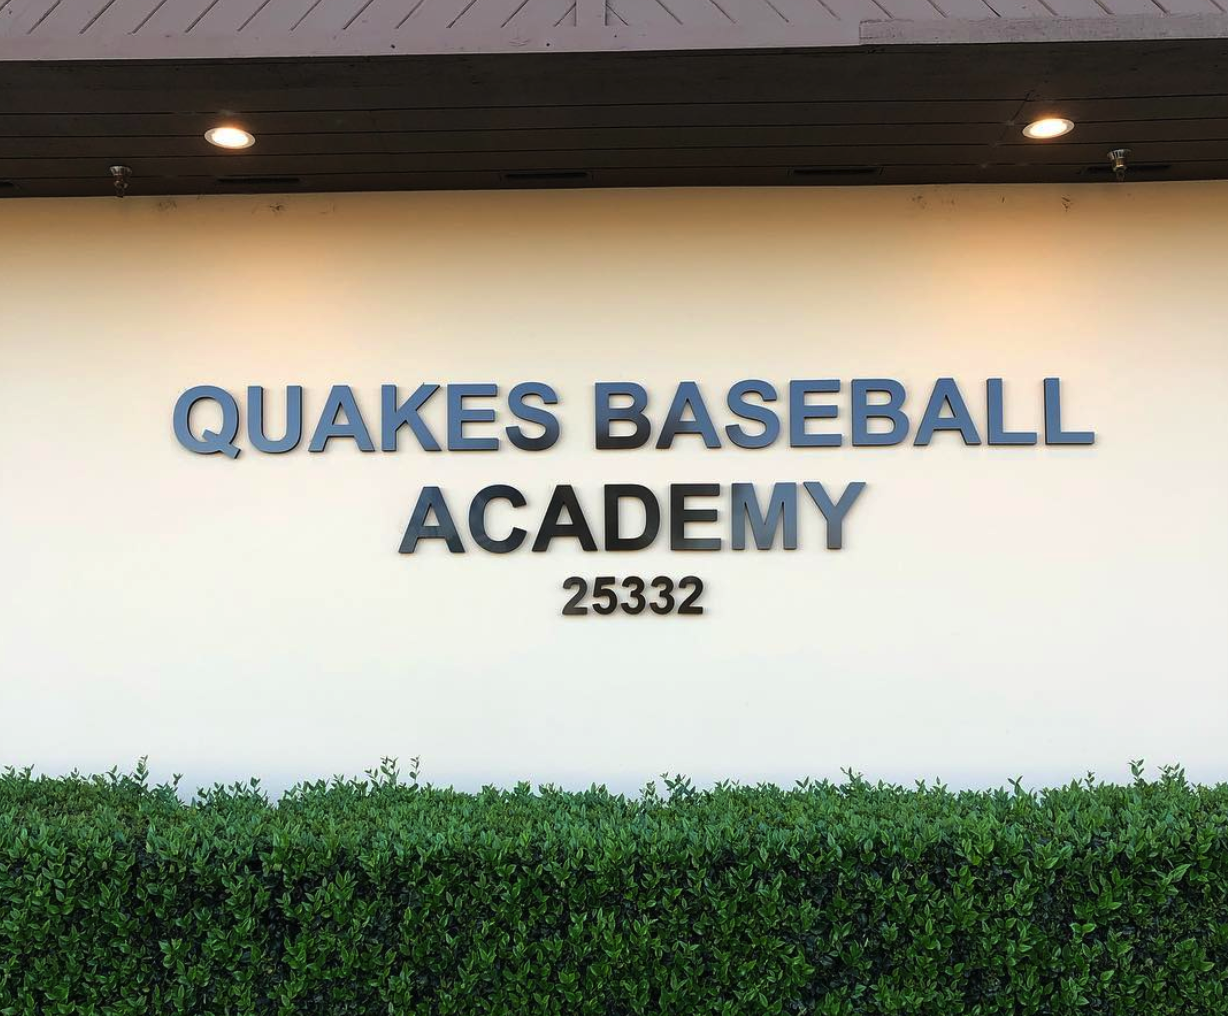 Vertimax Customer Spotlight with John Elliot of Quakes Baseball Academy